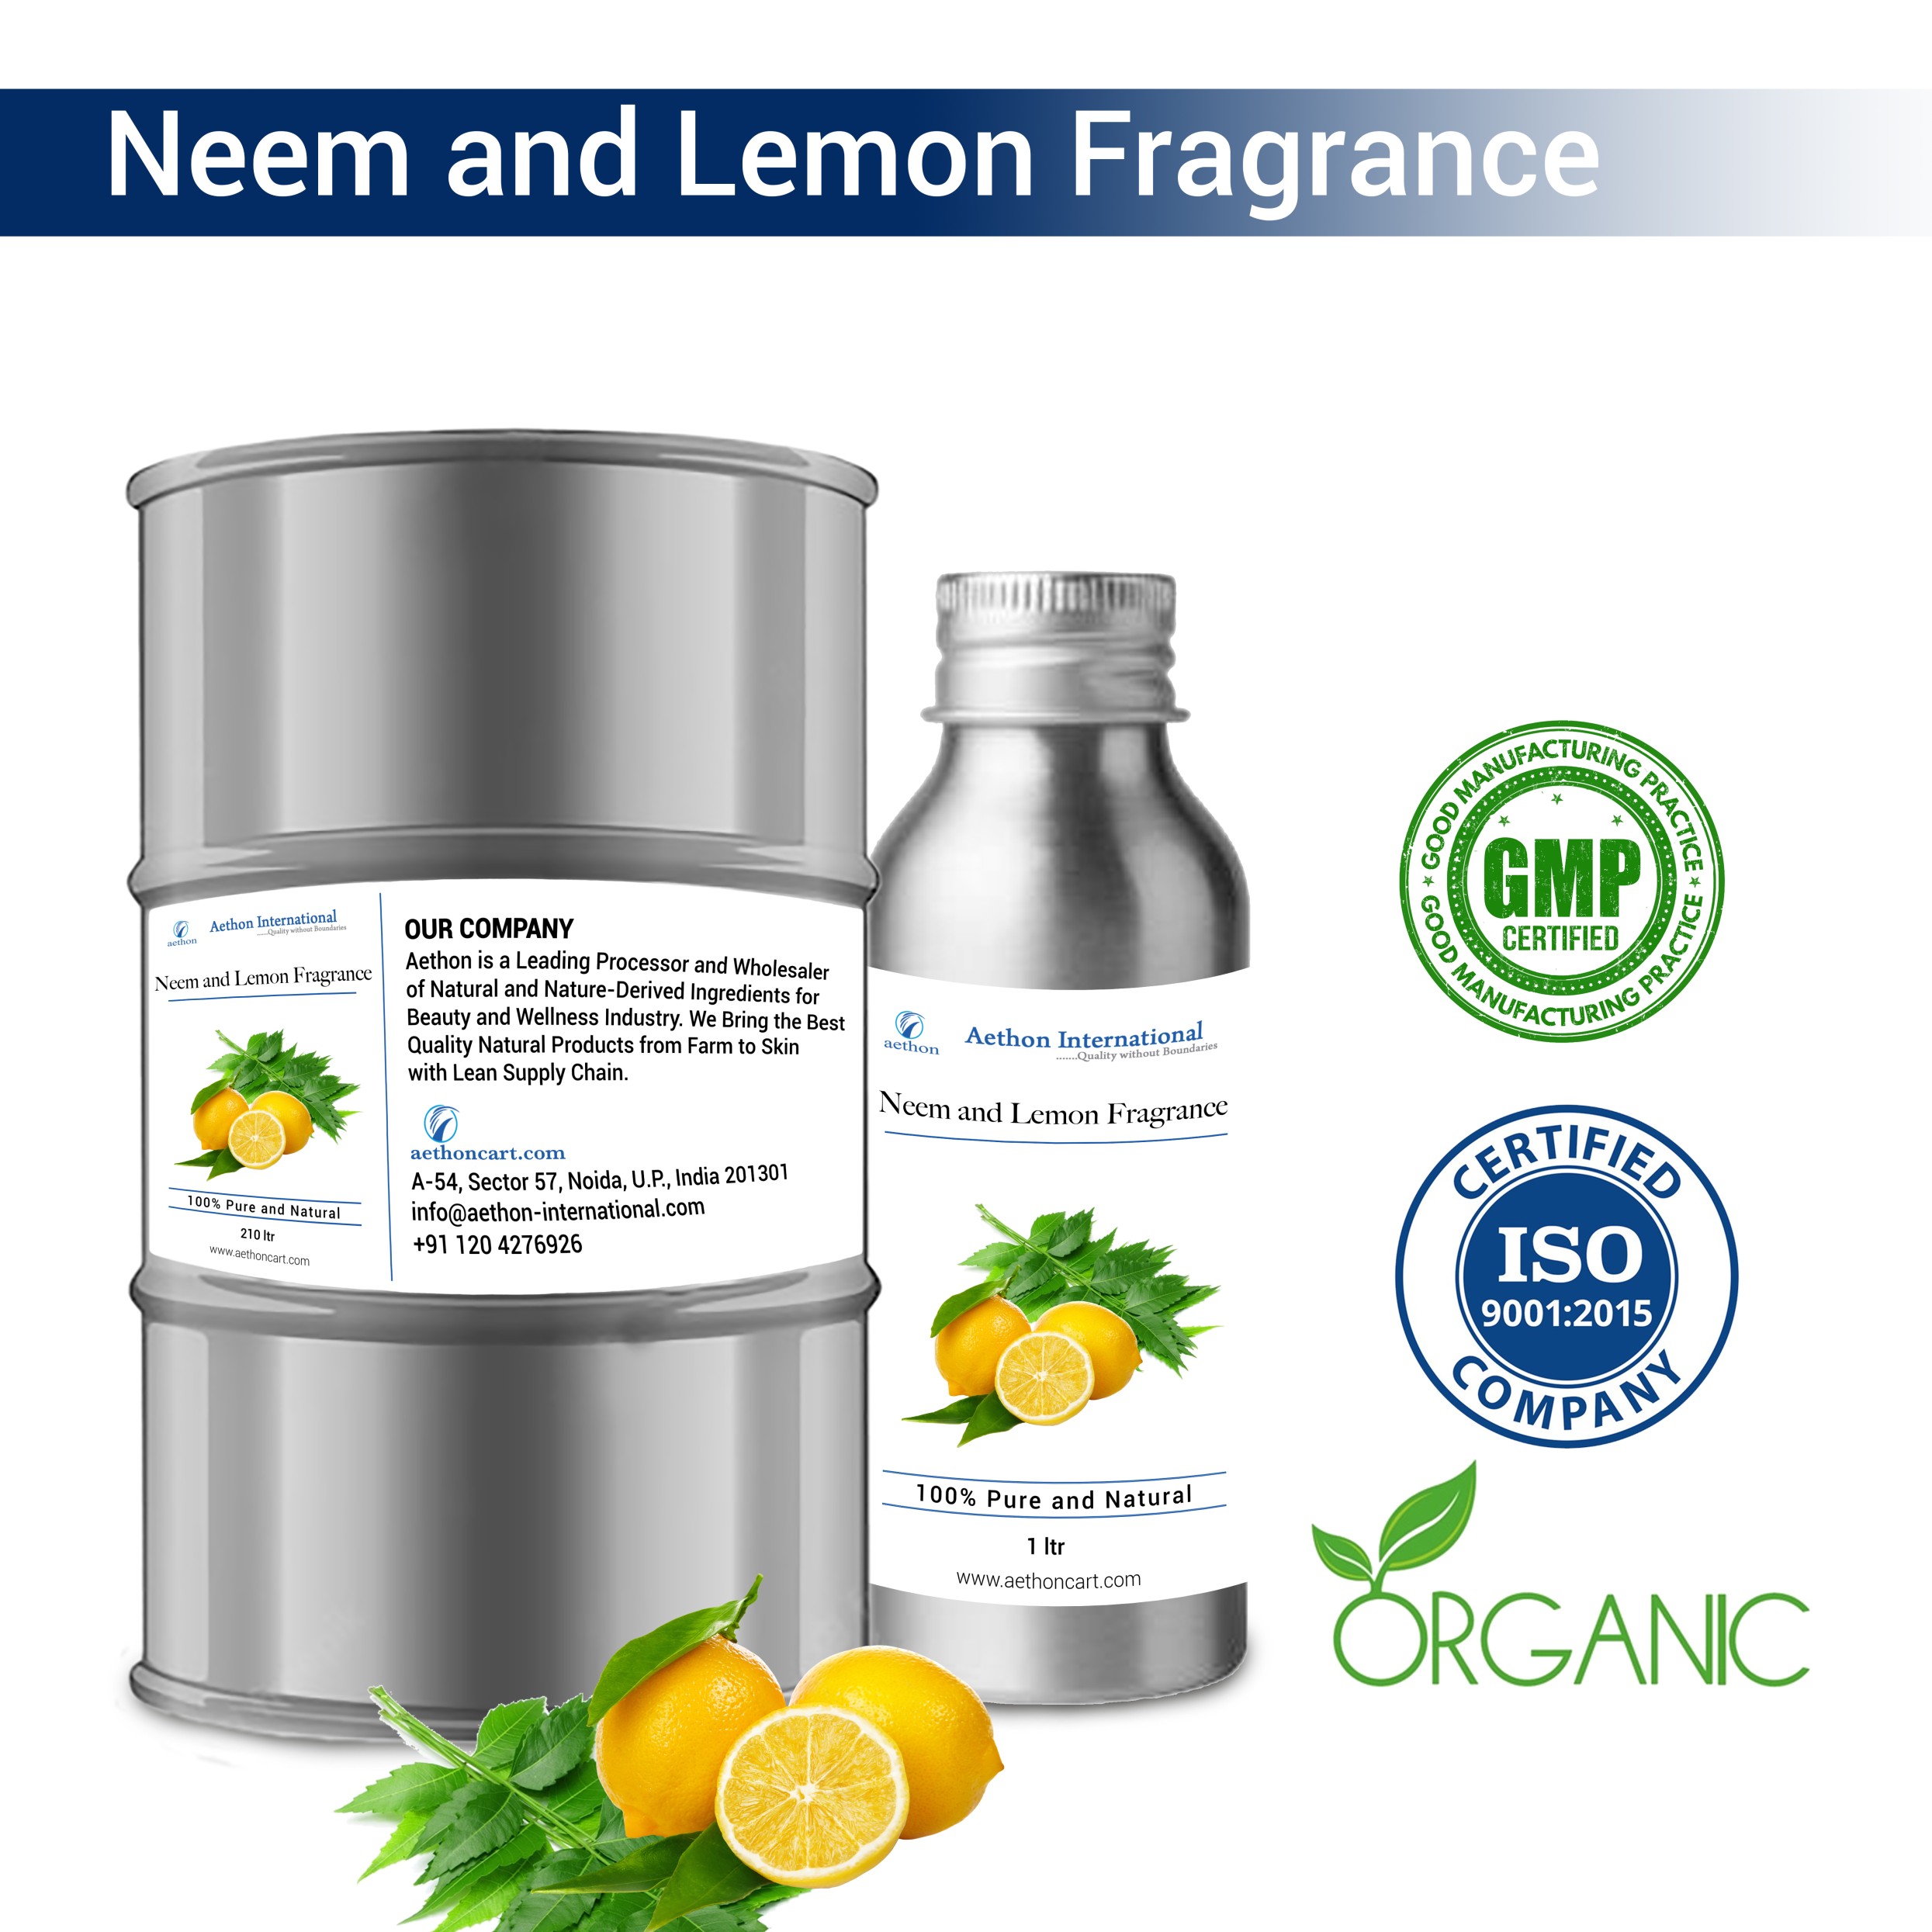 Neem and Lemon Fragrances (WS)